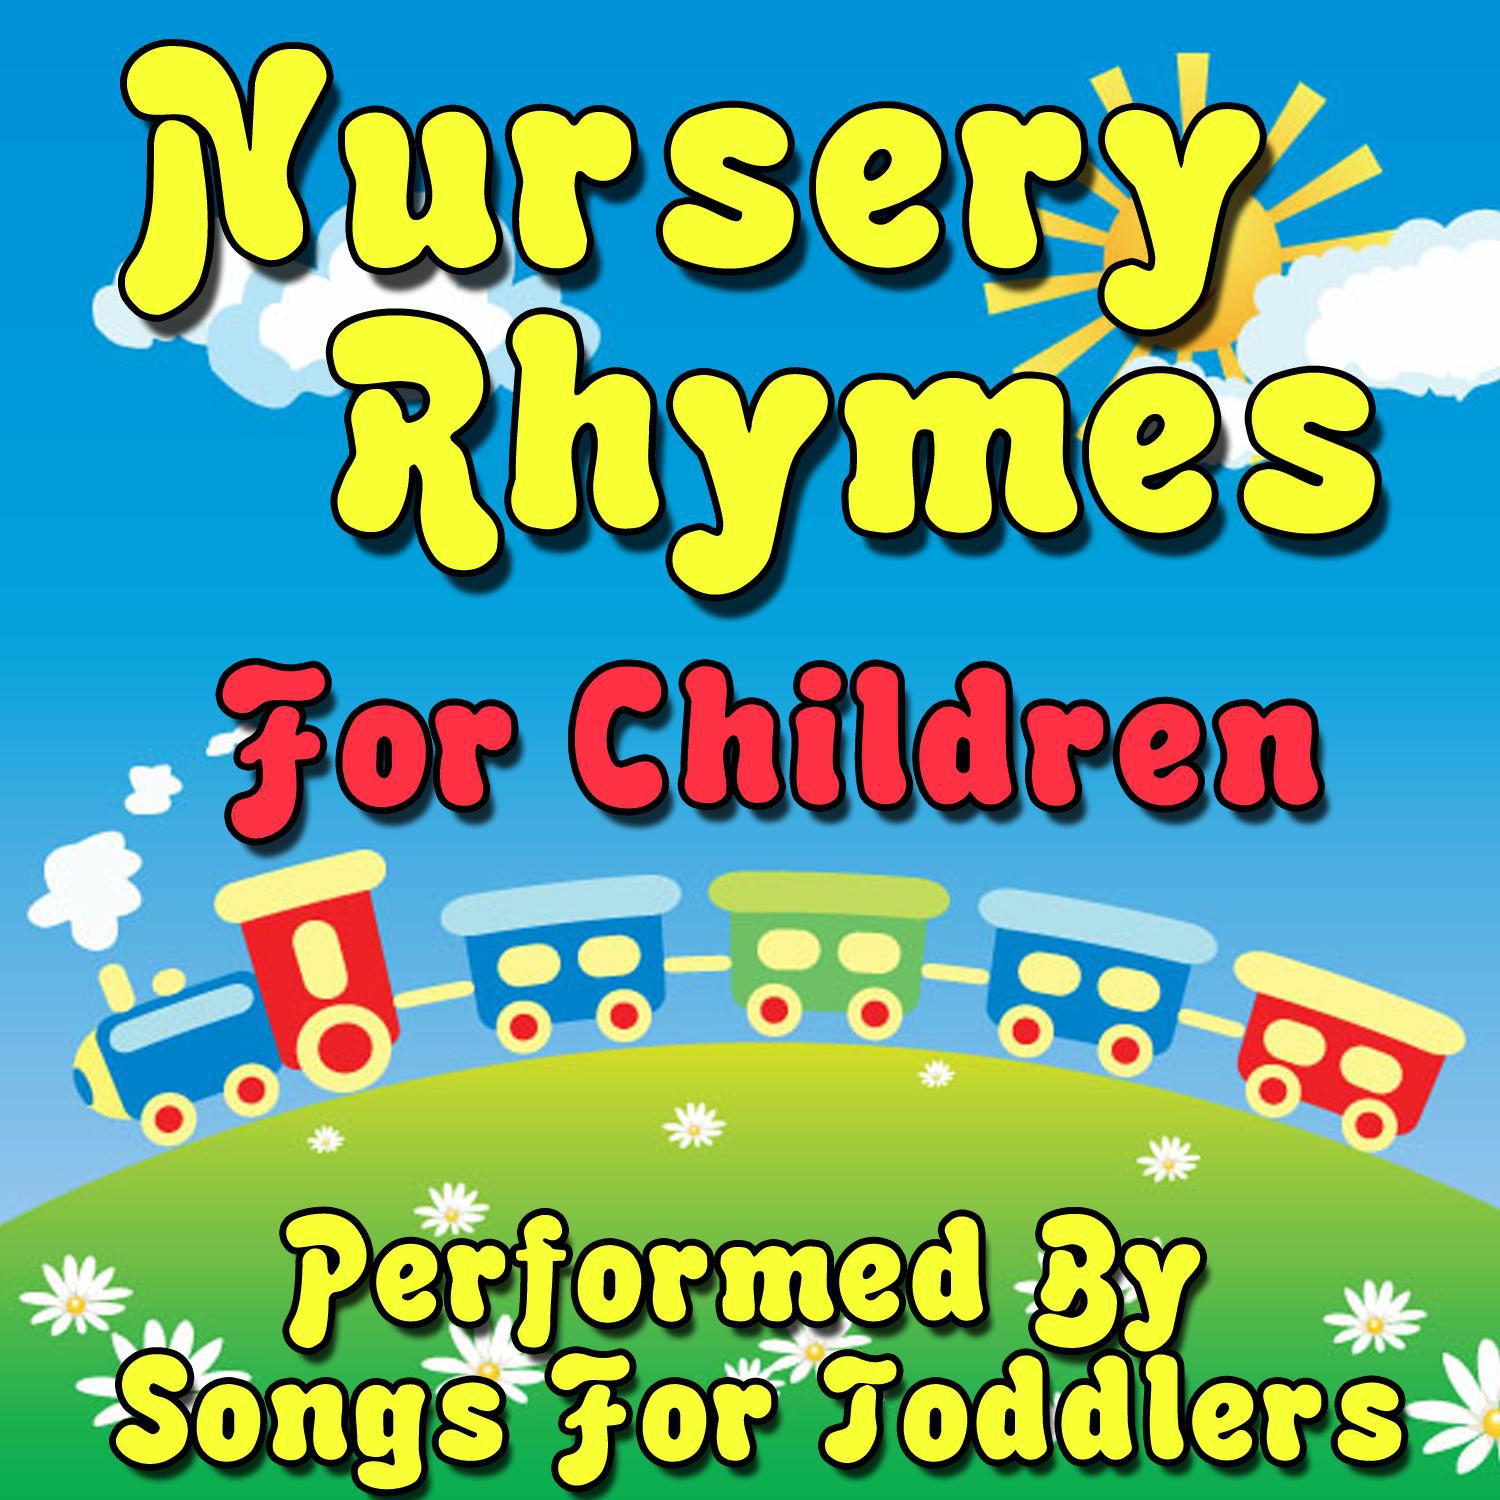 Nursery Rhymes For Children